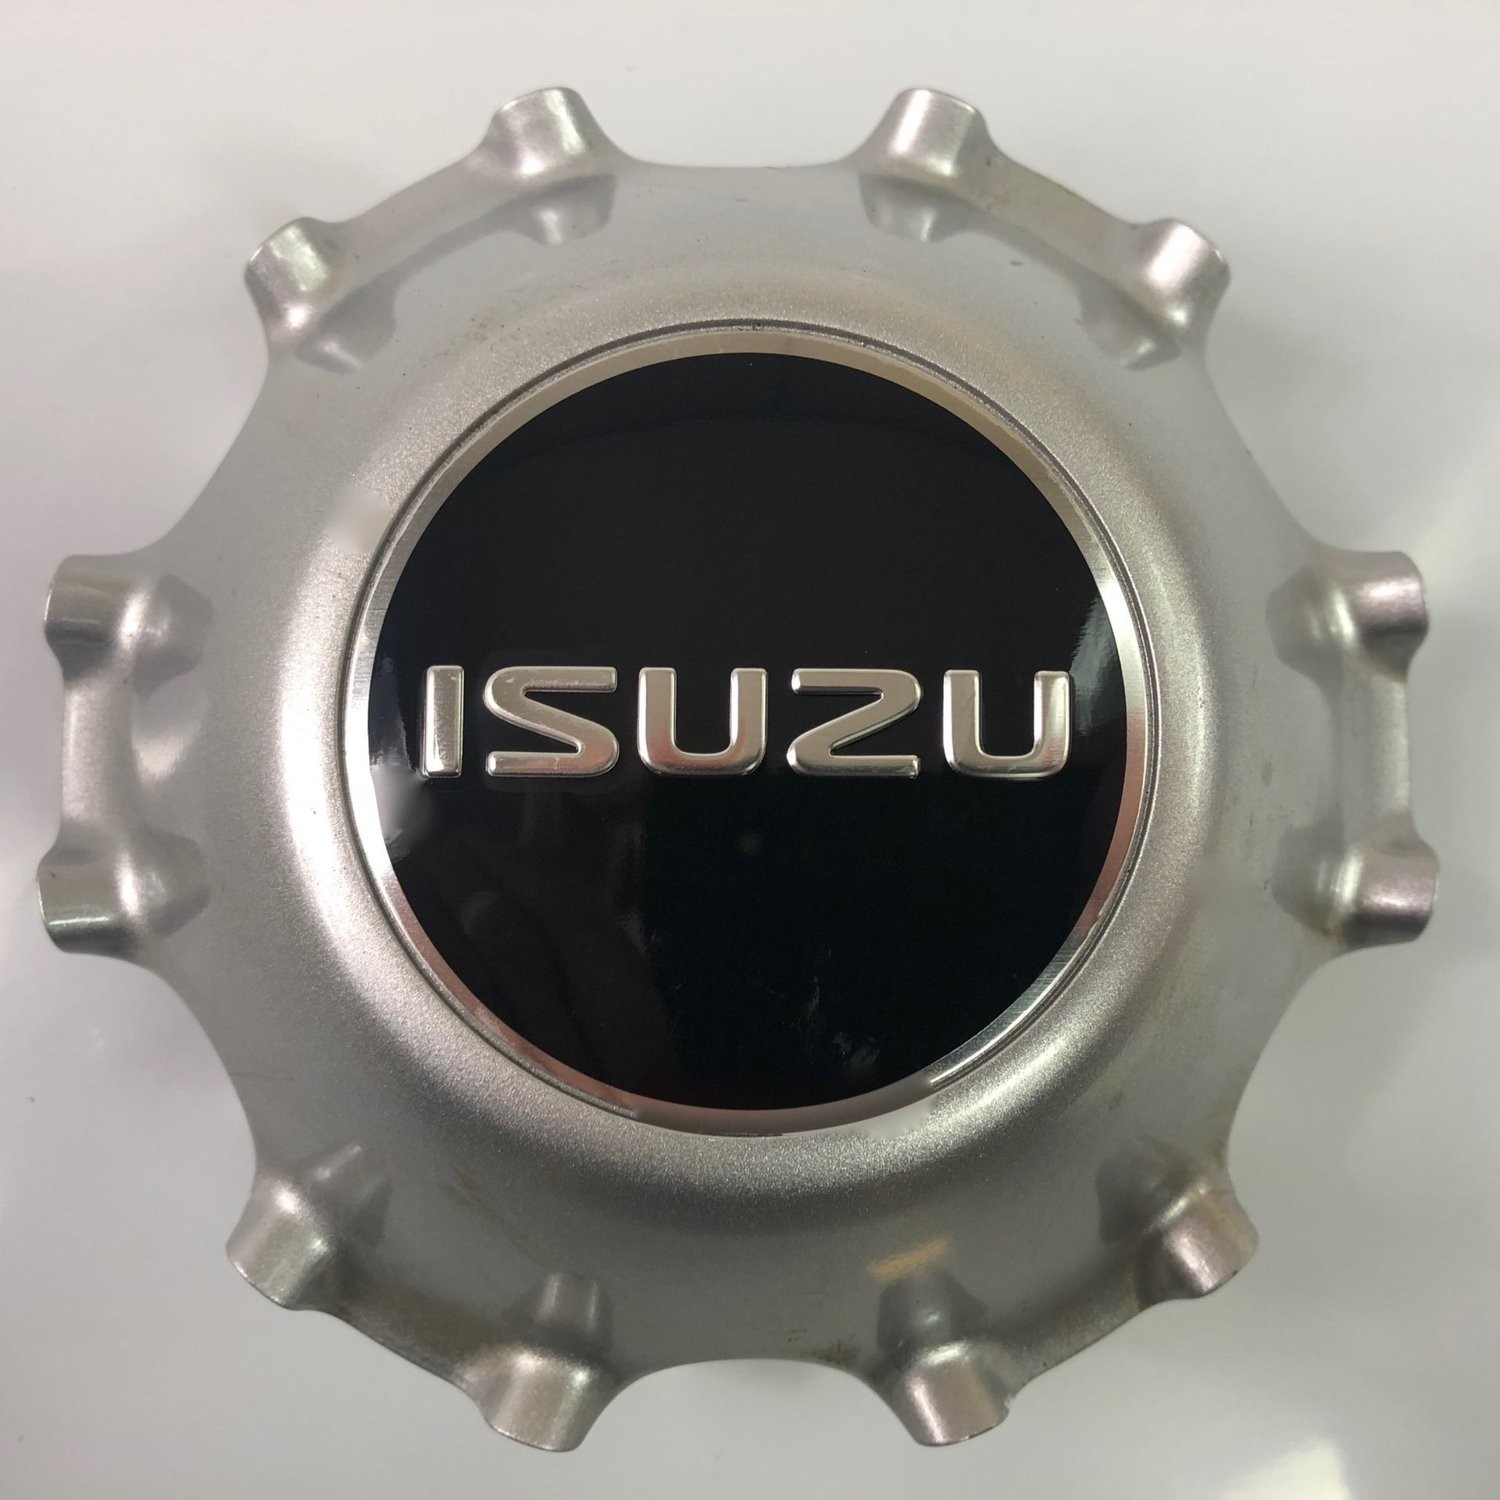 Isuzu D-Max 18" Alloy Wheel Centre Cap